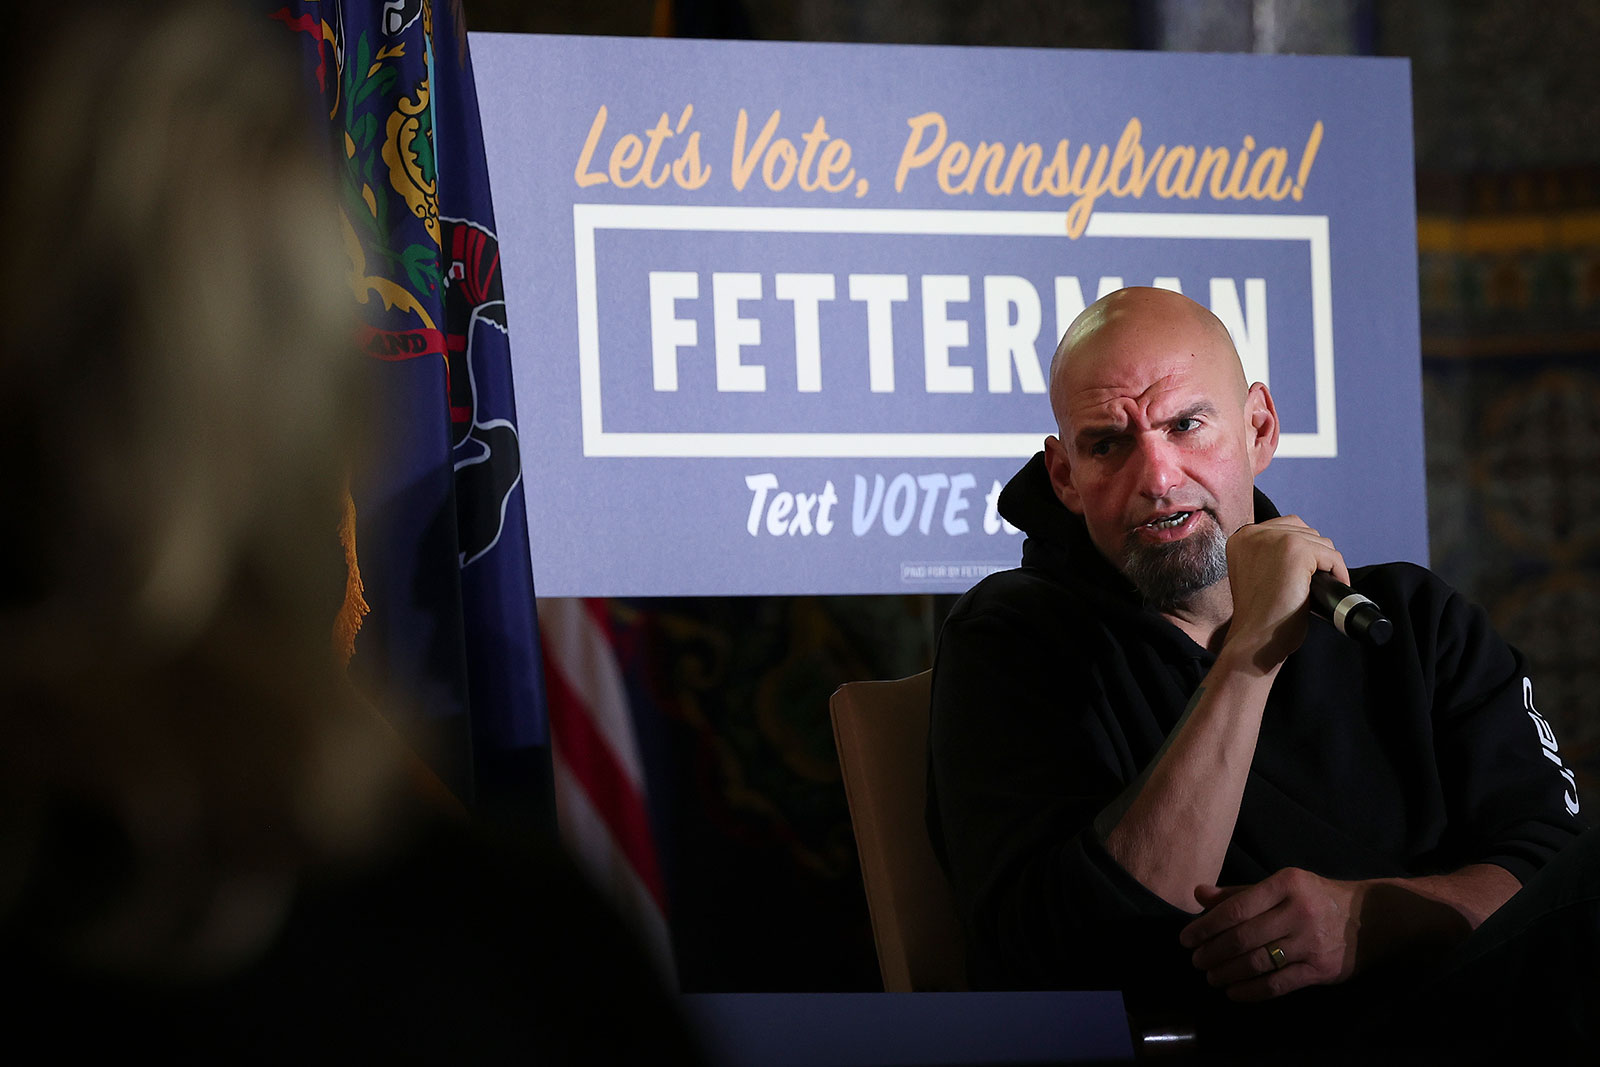 John Fetterman, Democratic candidate for Pennsylvania's Senate seat, speaks during a campaign event in Harrisburg, Pennsylvania, on November 6.